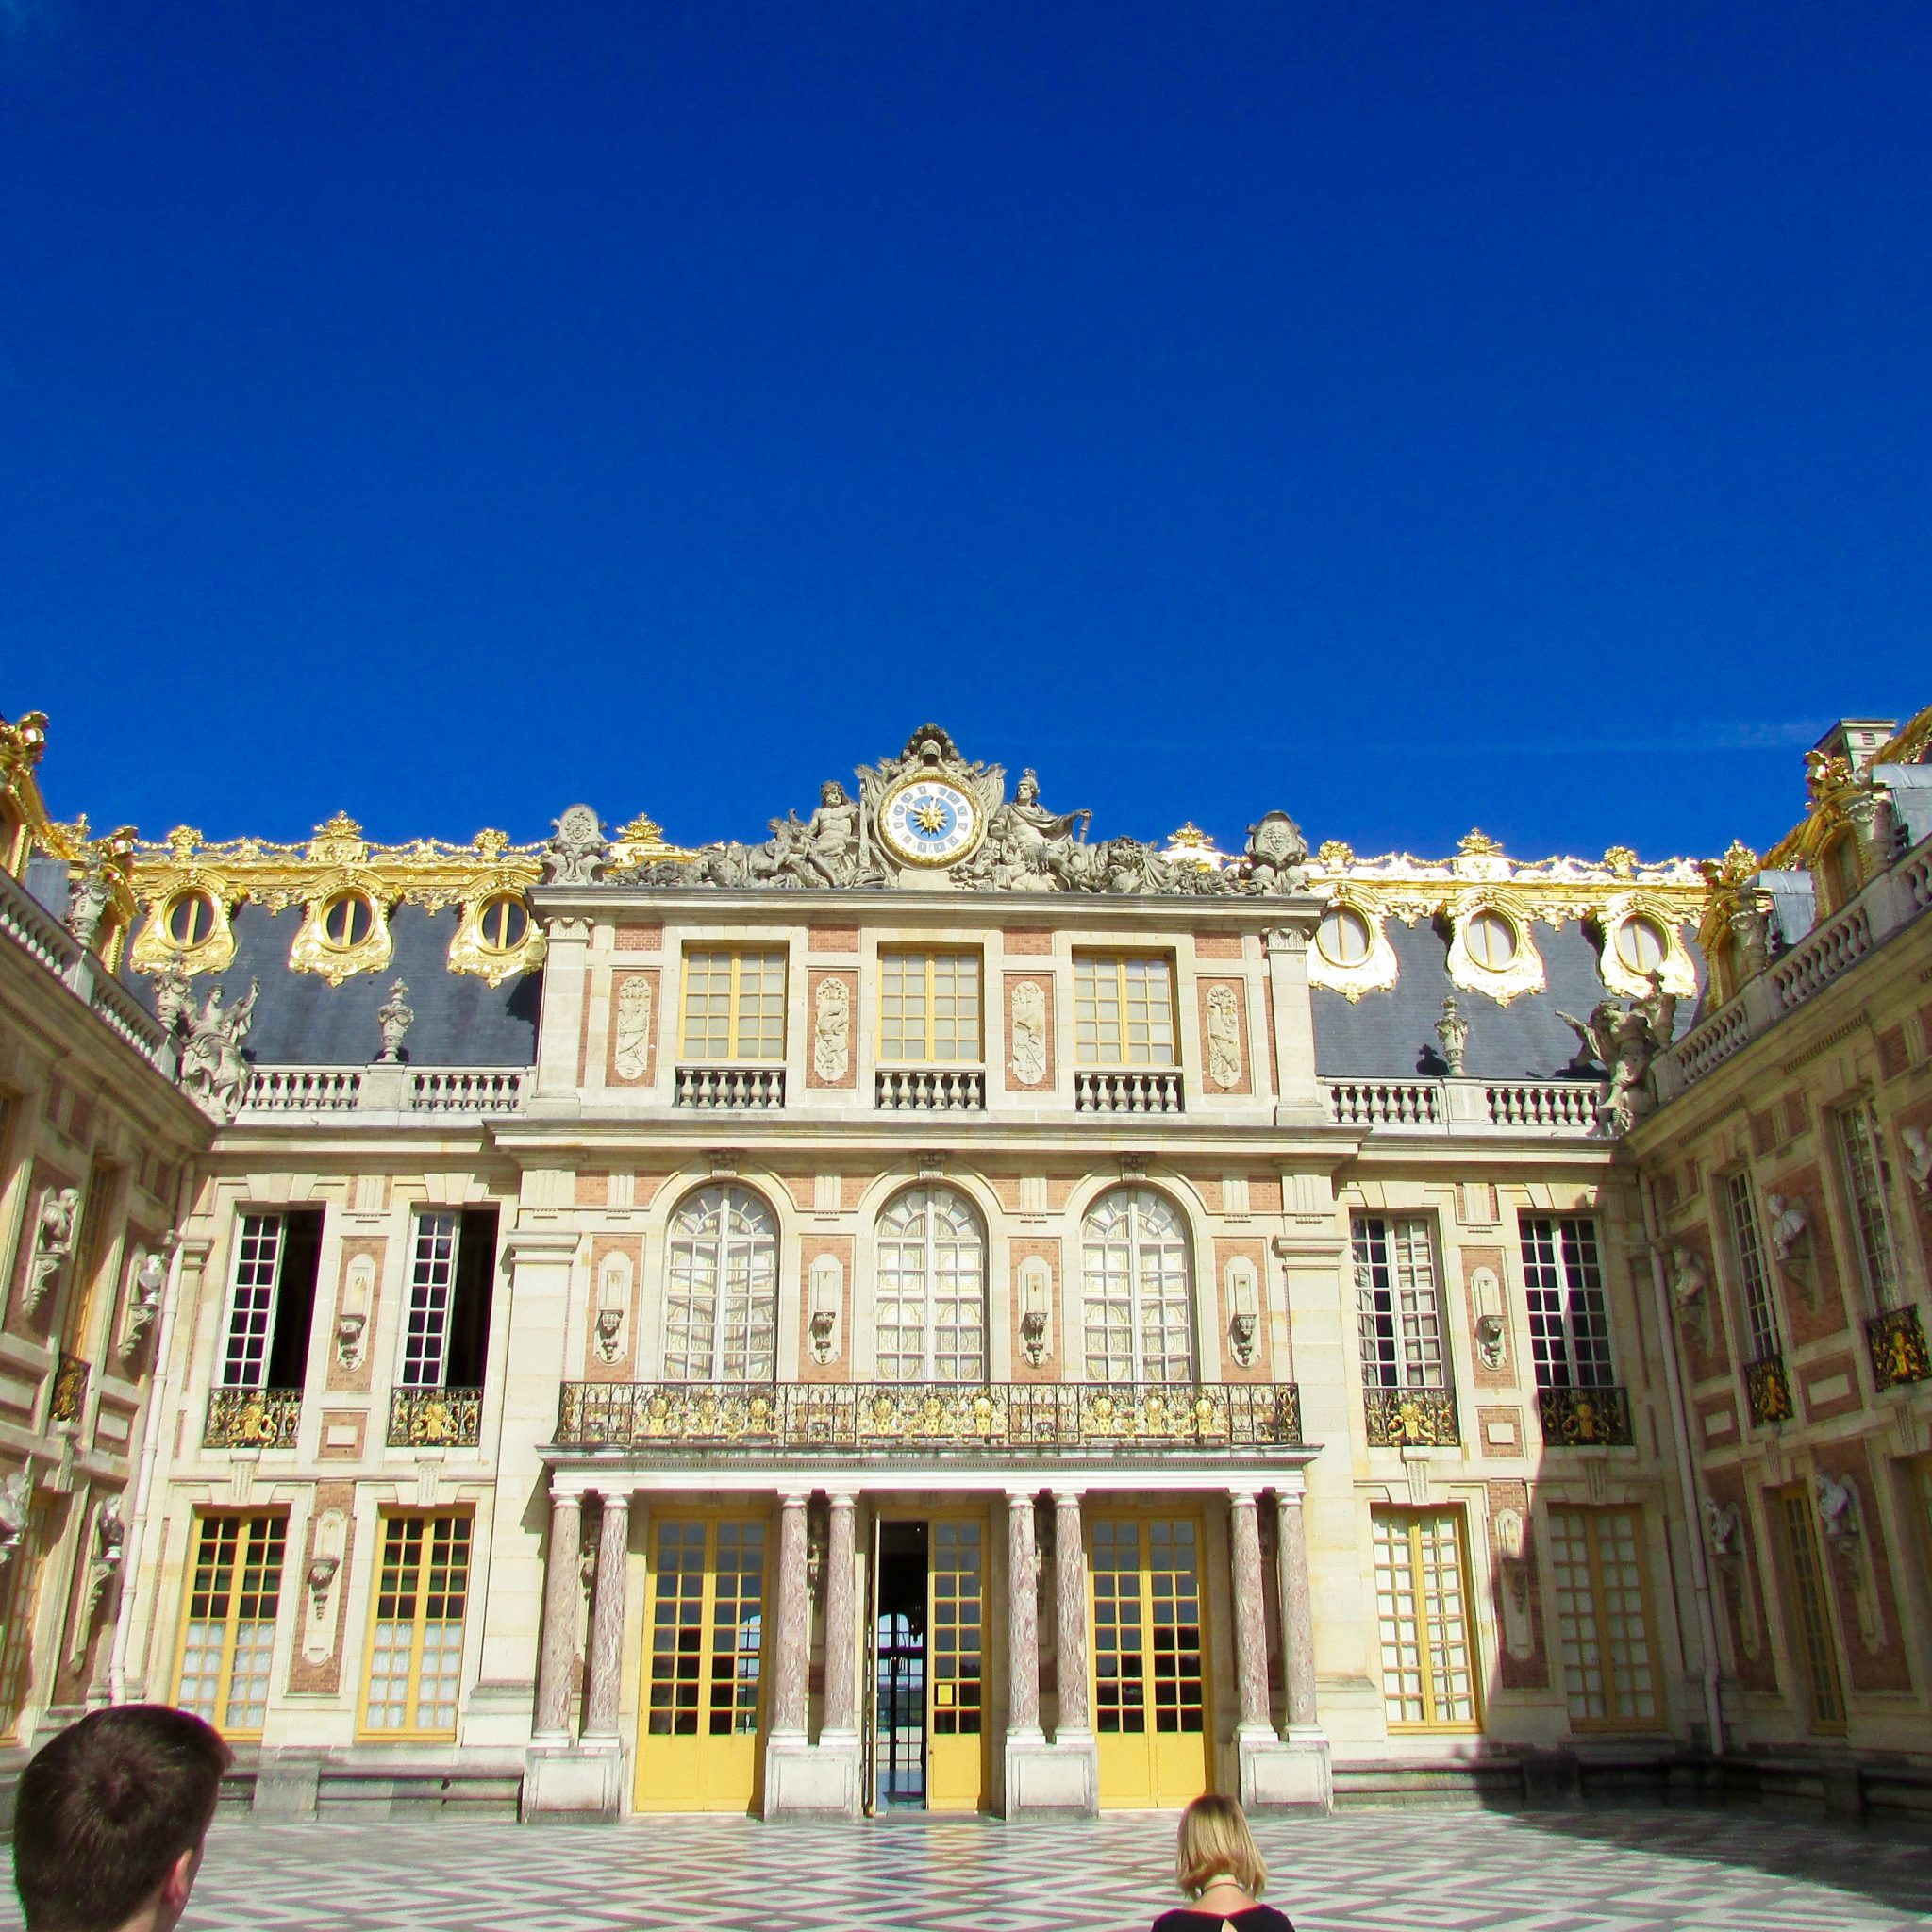 Feeling like Royalty at the Palace of Versailles